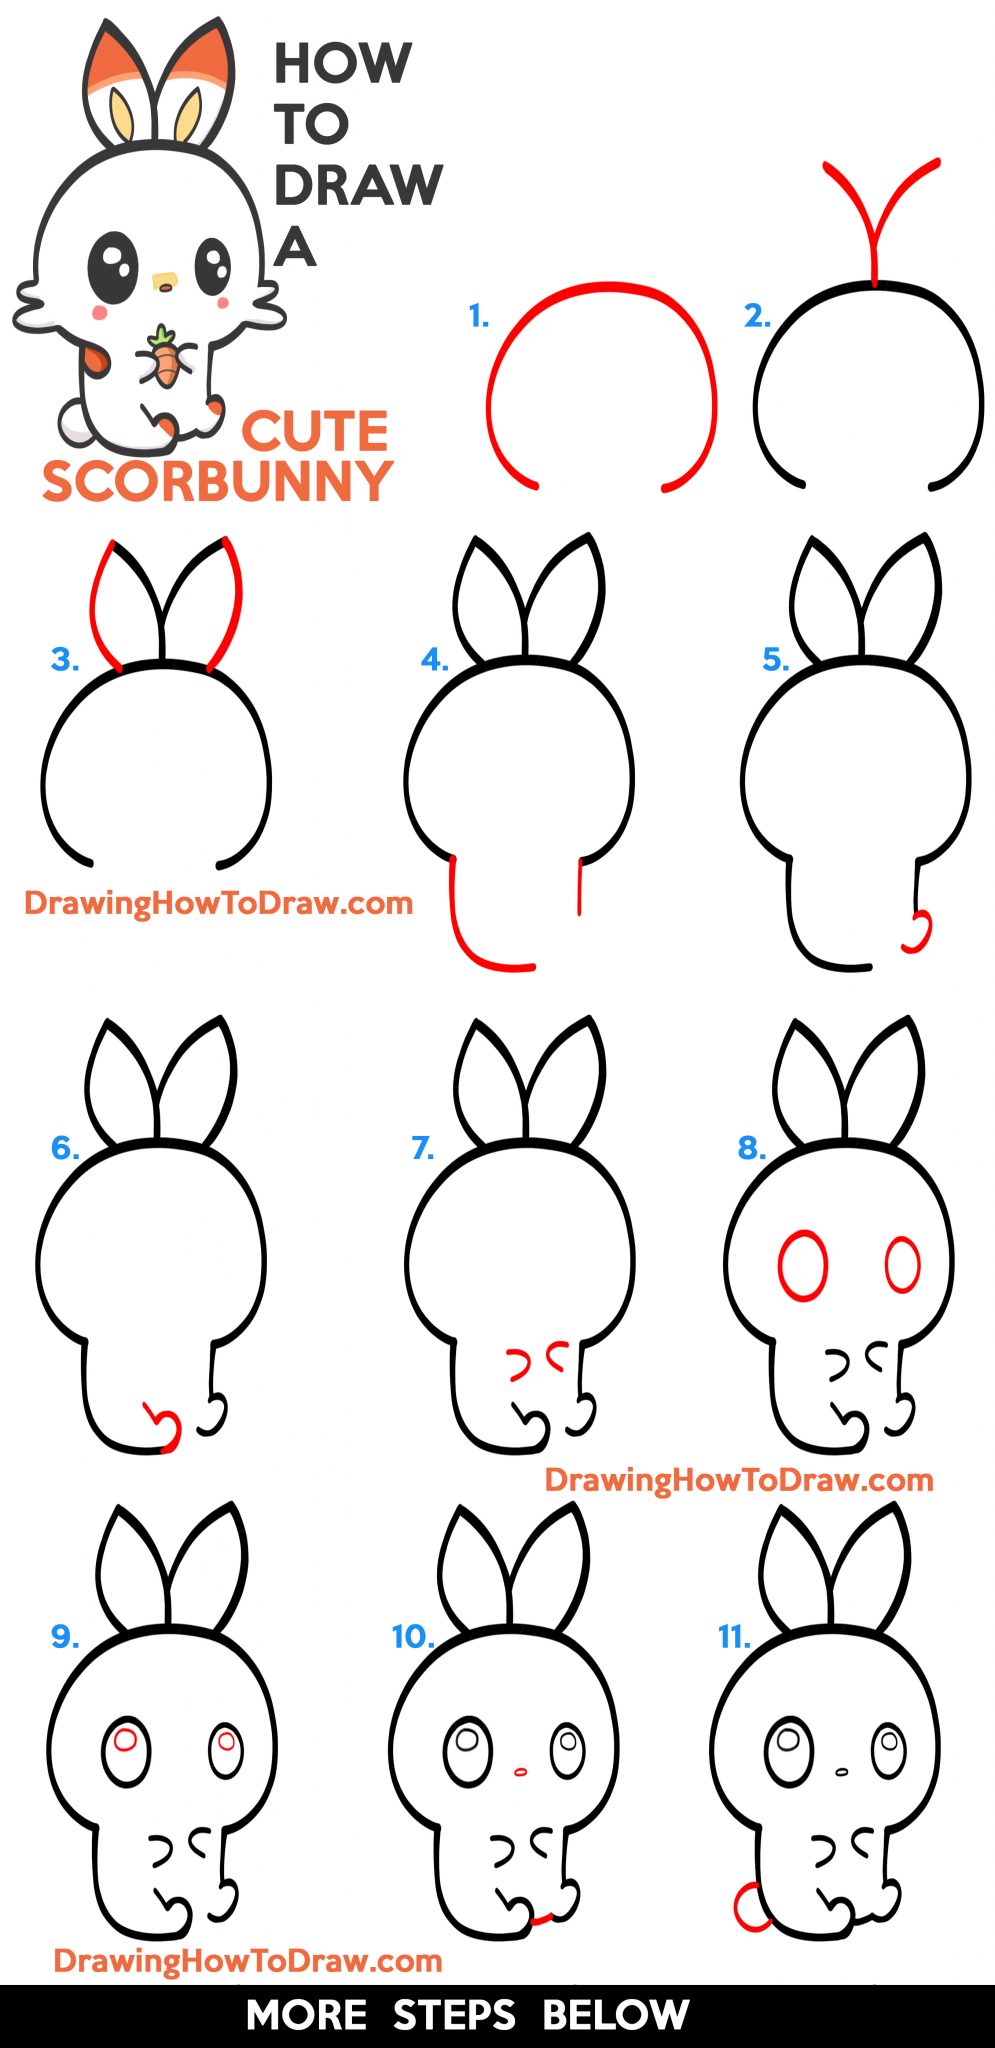 How to Draw a Cute (Kawaii / Chibi) Scorbunny from Pokemon - Easy Step ...